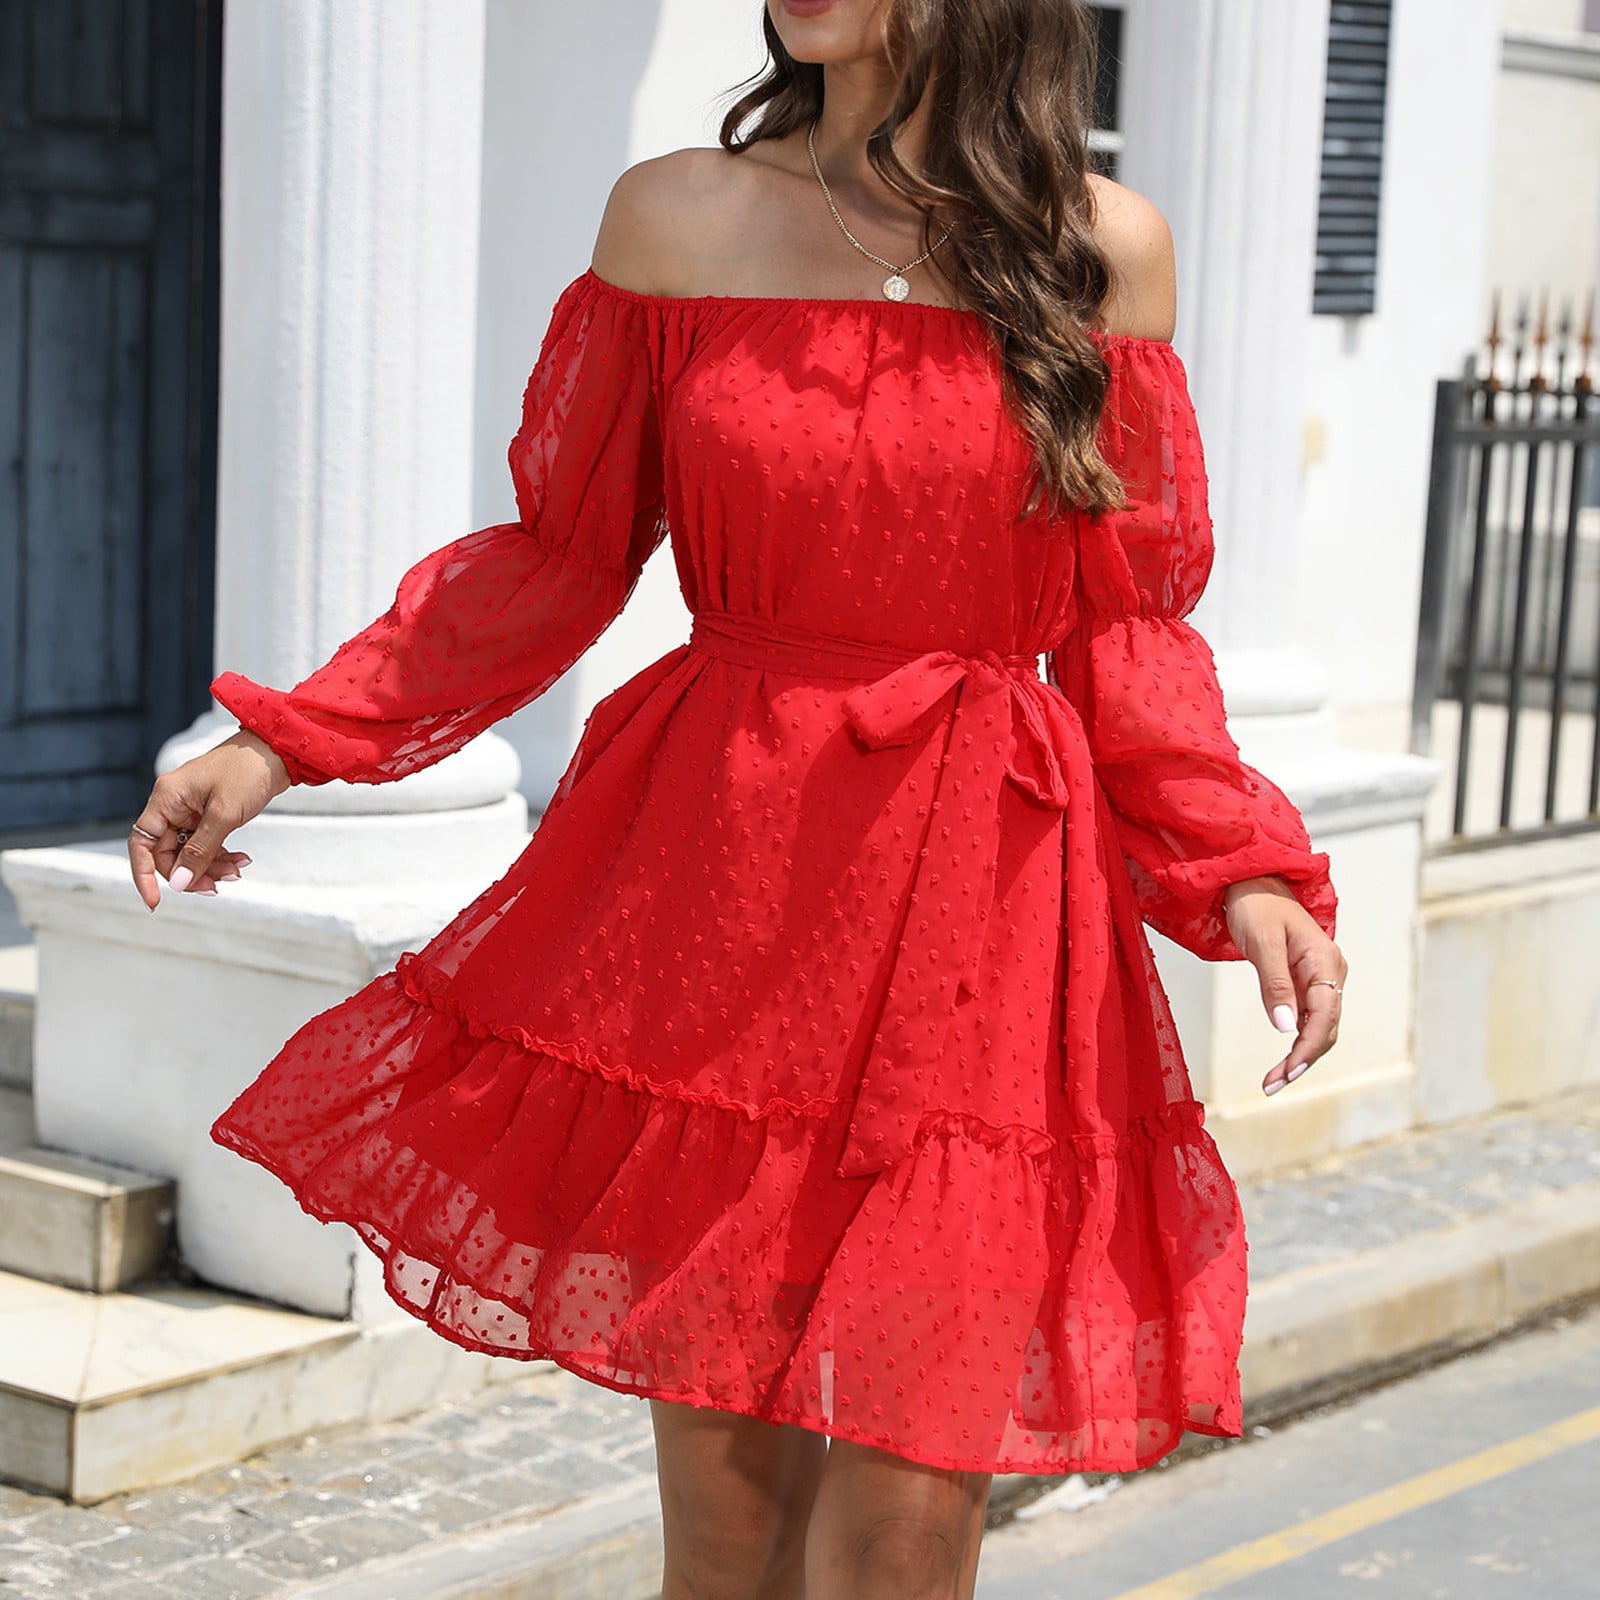 women red dresses